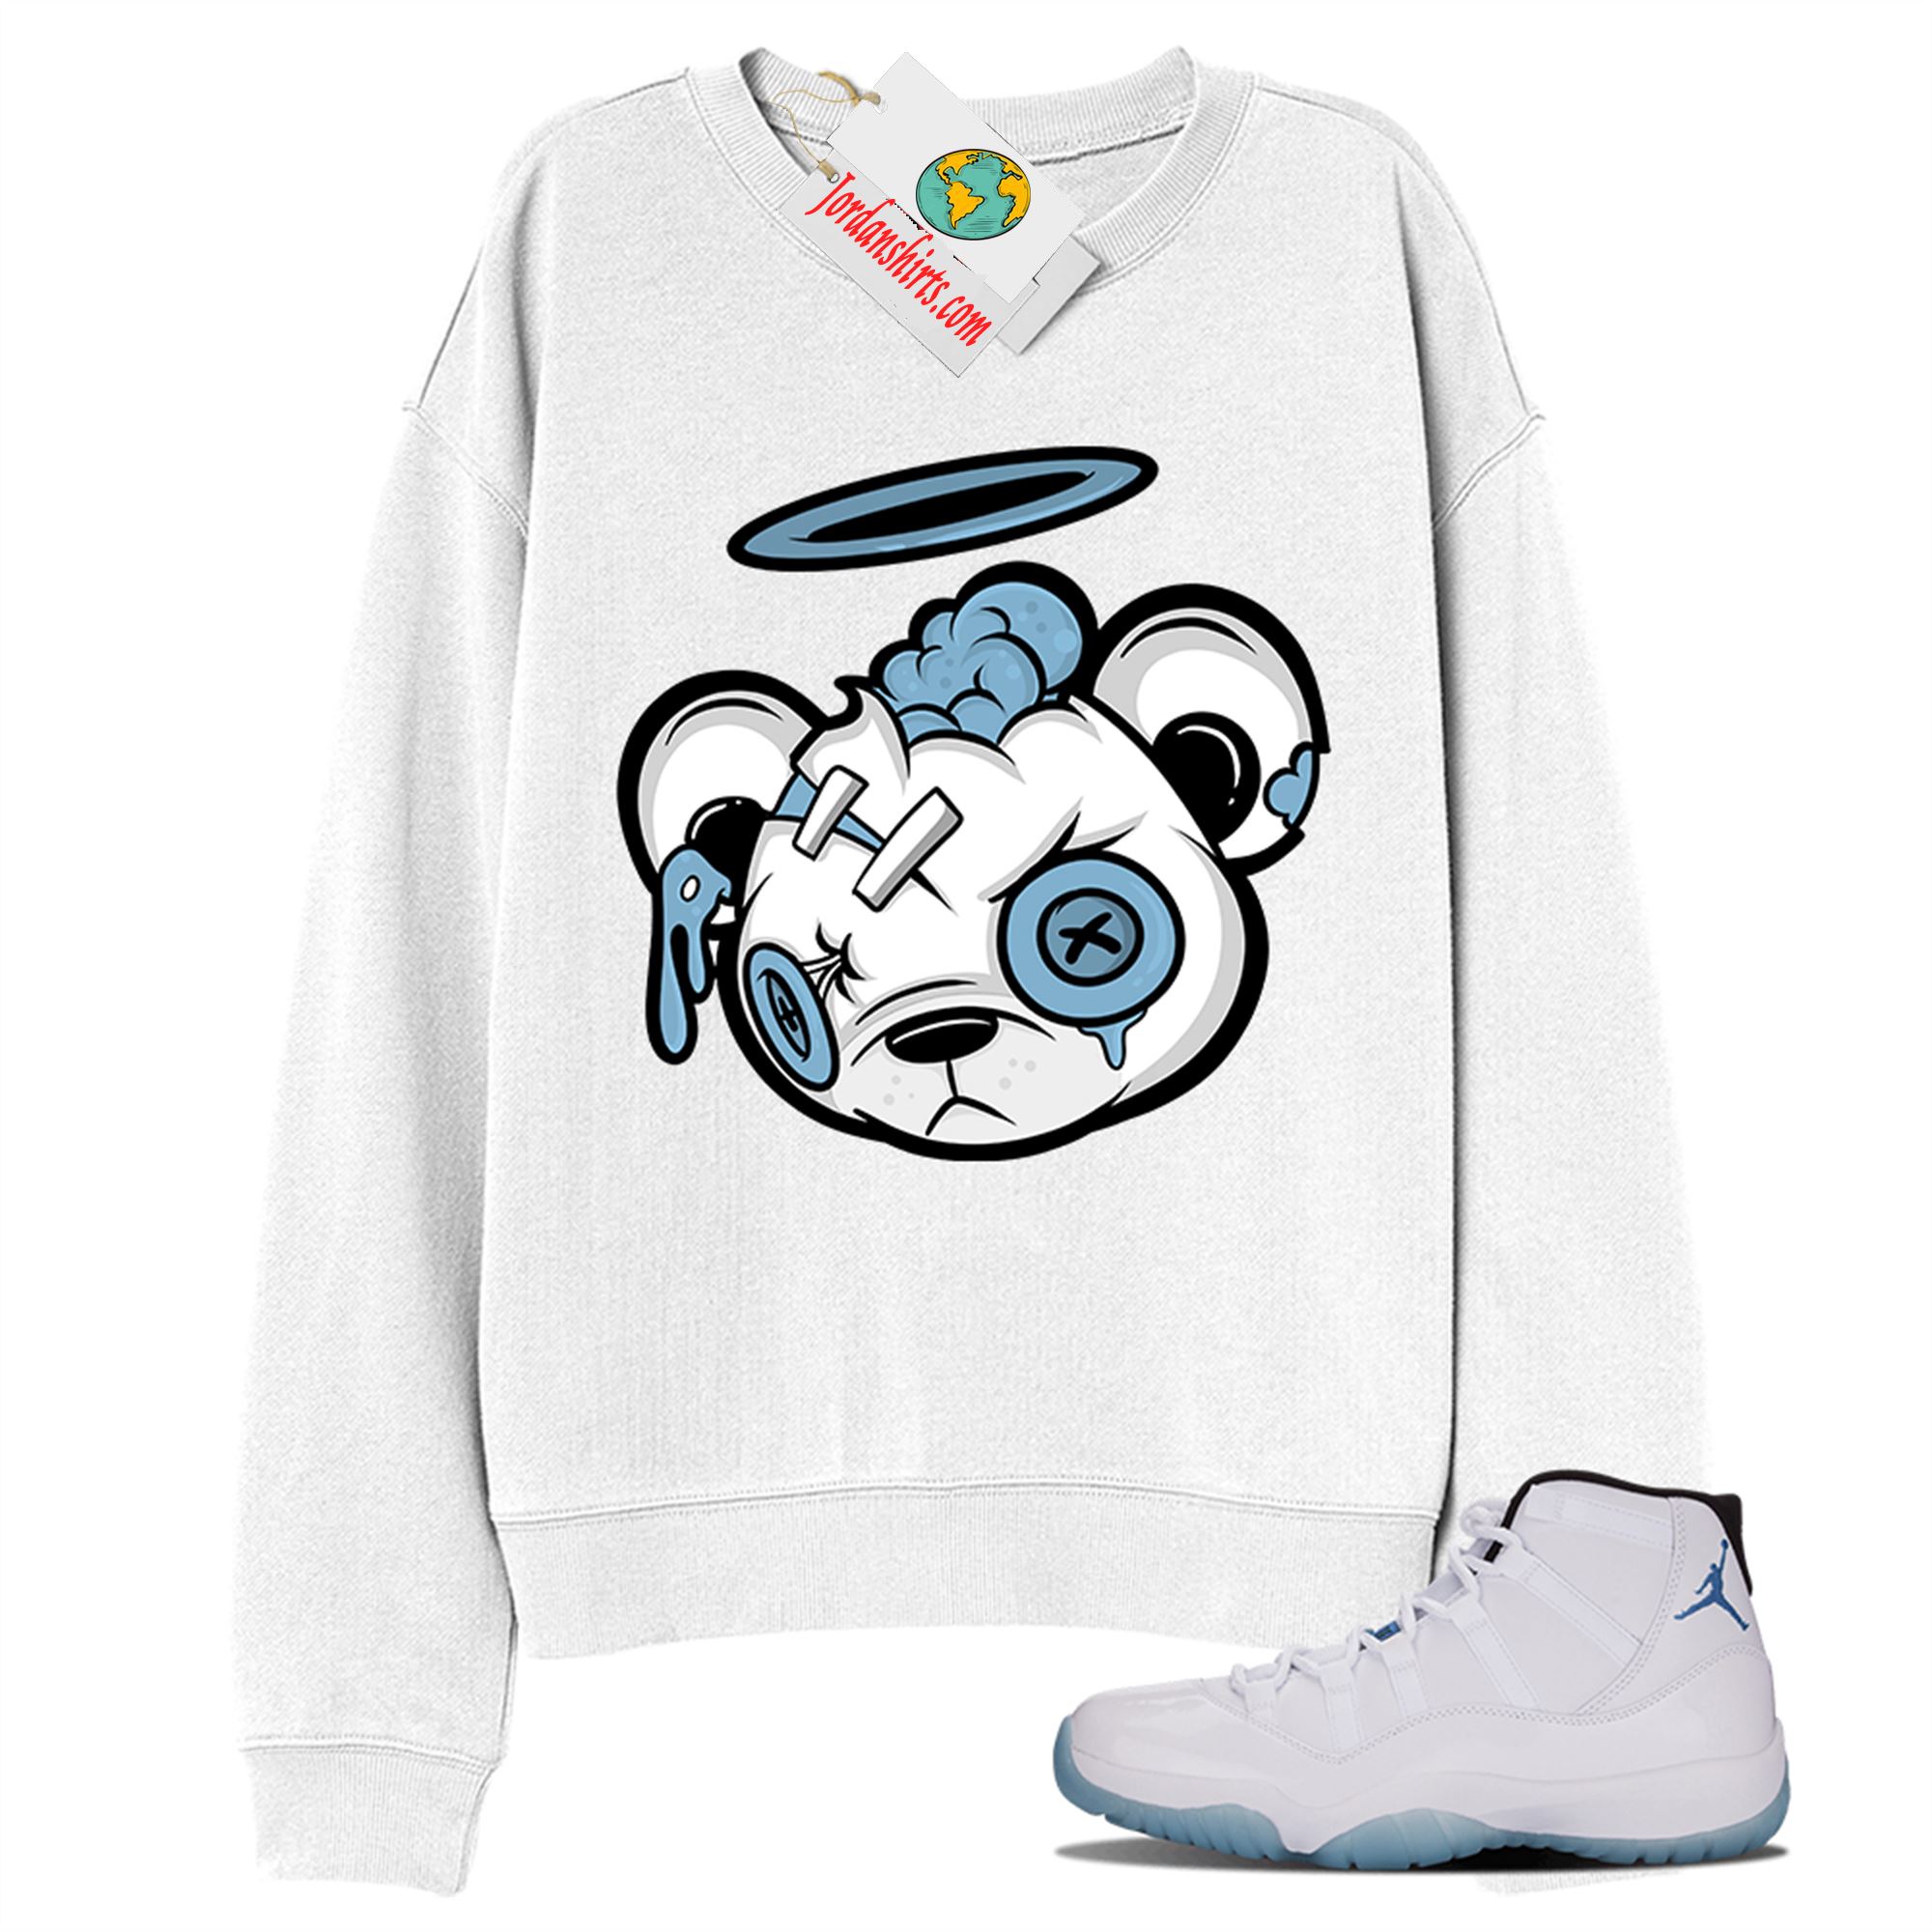 Jordan 11 Sweatshirt, Halo Teddy White Sweatshirt Air Jordan 11 Legend Blue 11s Full Size Up To 5xl